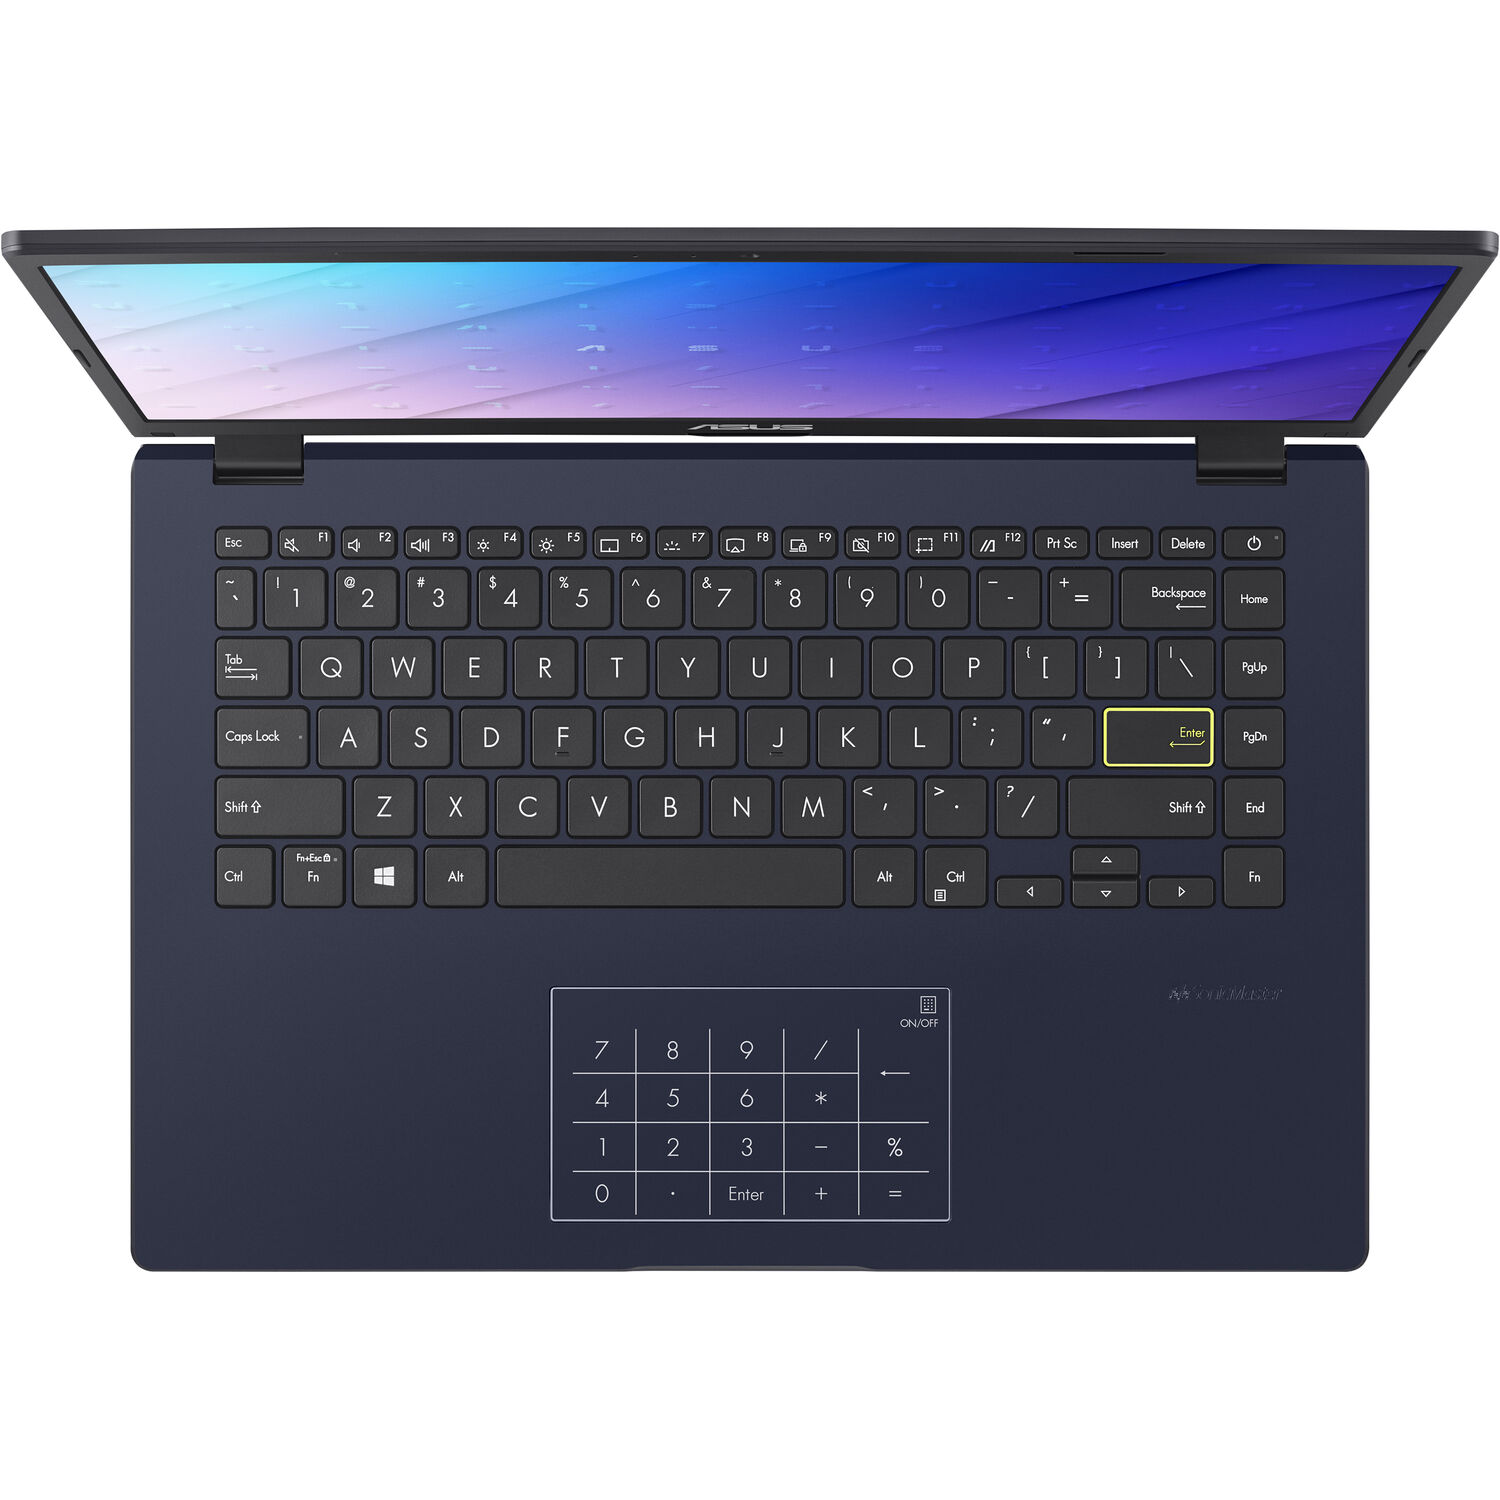 ASUS 14 L410 Everyday Value Laptop (Intel Celeron N4020 2-Core, 4GB RAM, 256GB PCIe SSD, 14.0" Full HD (1920x1080), Intel UHD 600, Wifi, Bluetooth, Webcam, 1xUSB 3.2, 1xHDMI, Win 10 Home) - image 3 of 6